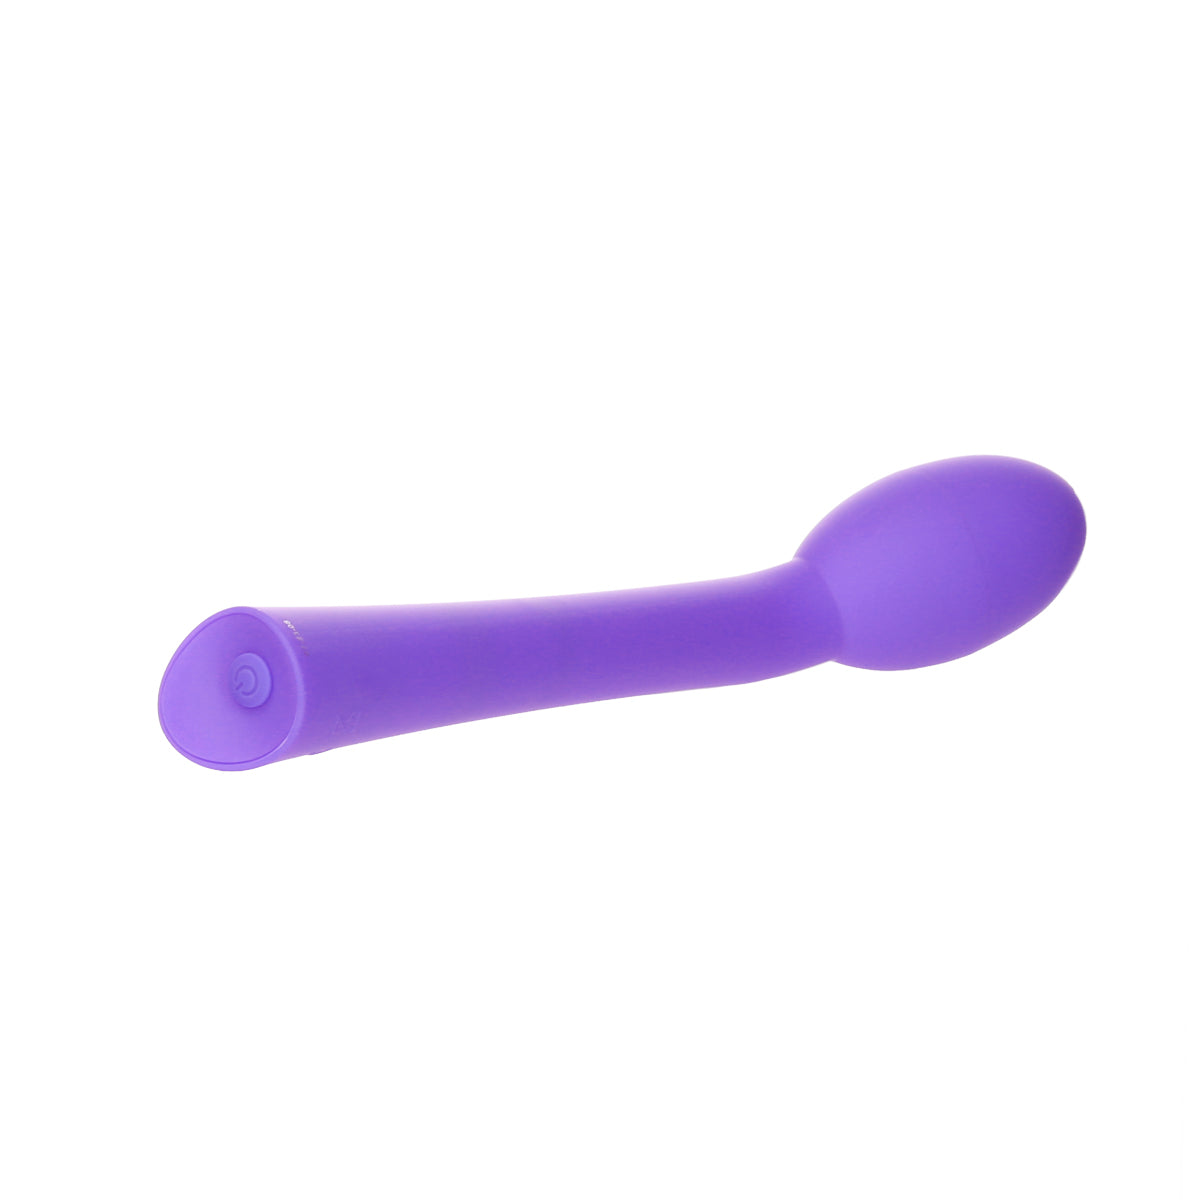 Seven Creations – Hip G - Rechargeable G-Spot Vibrator - Purple